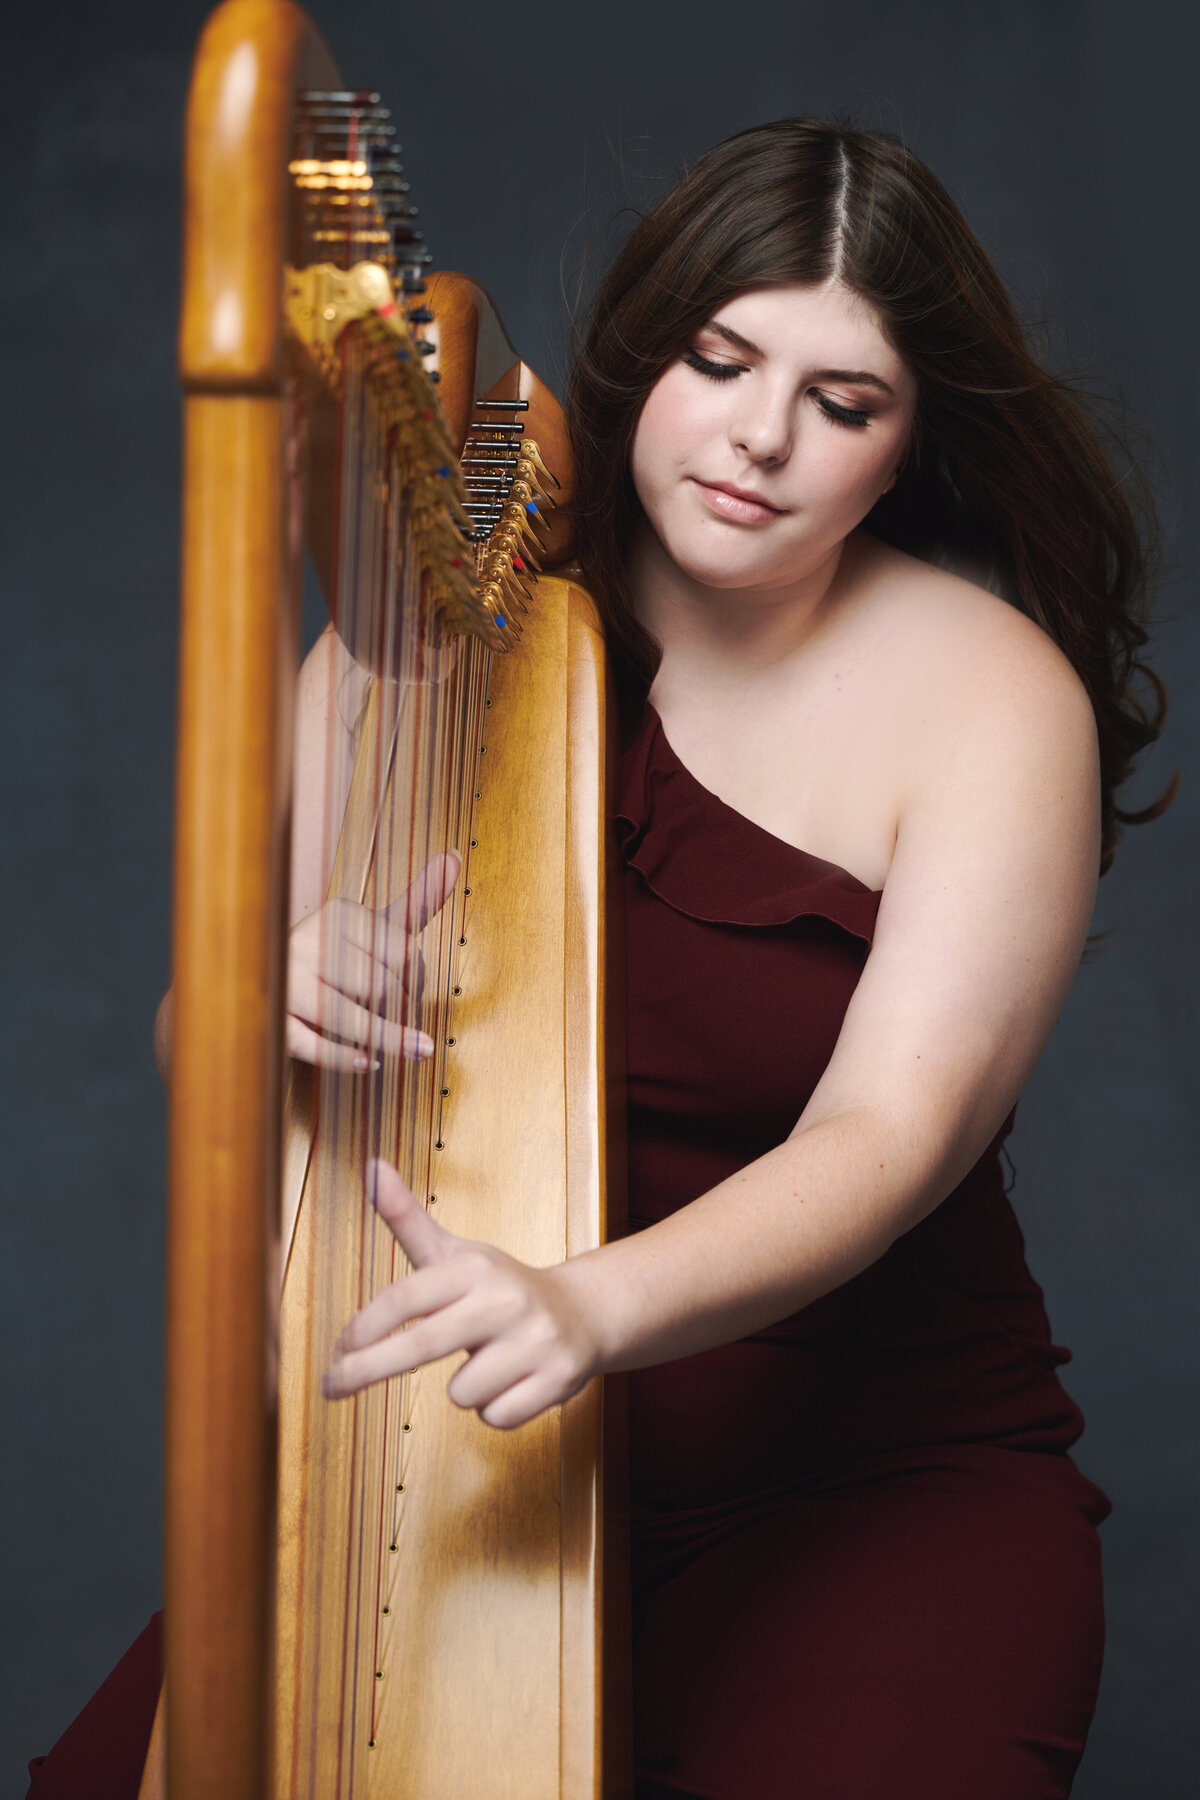 Senior picture with harp photographer -2